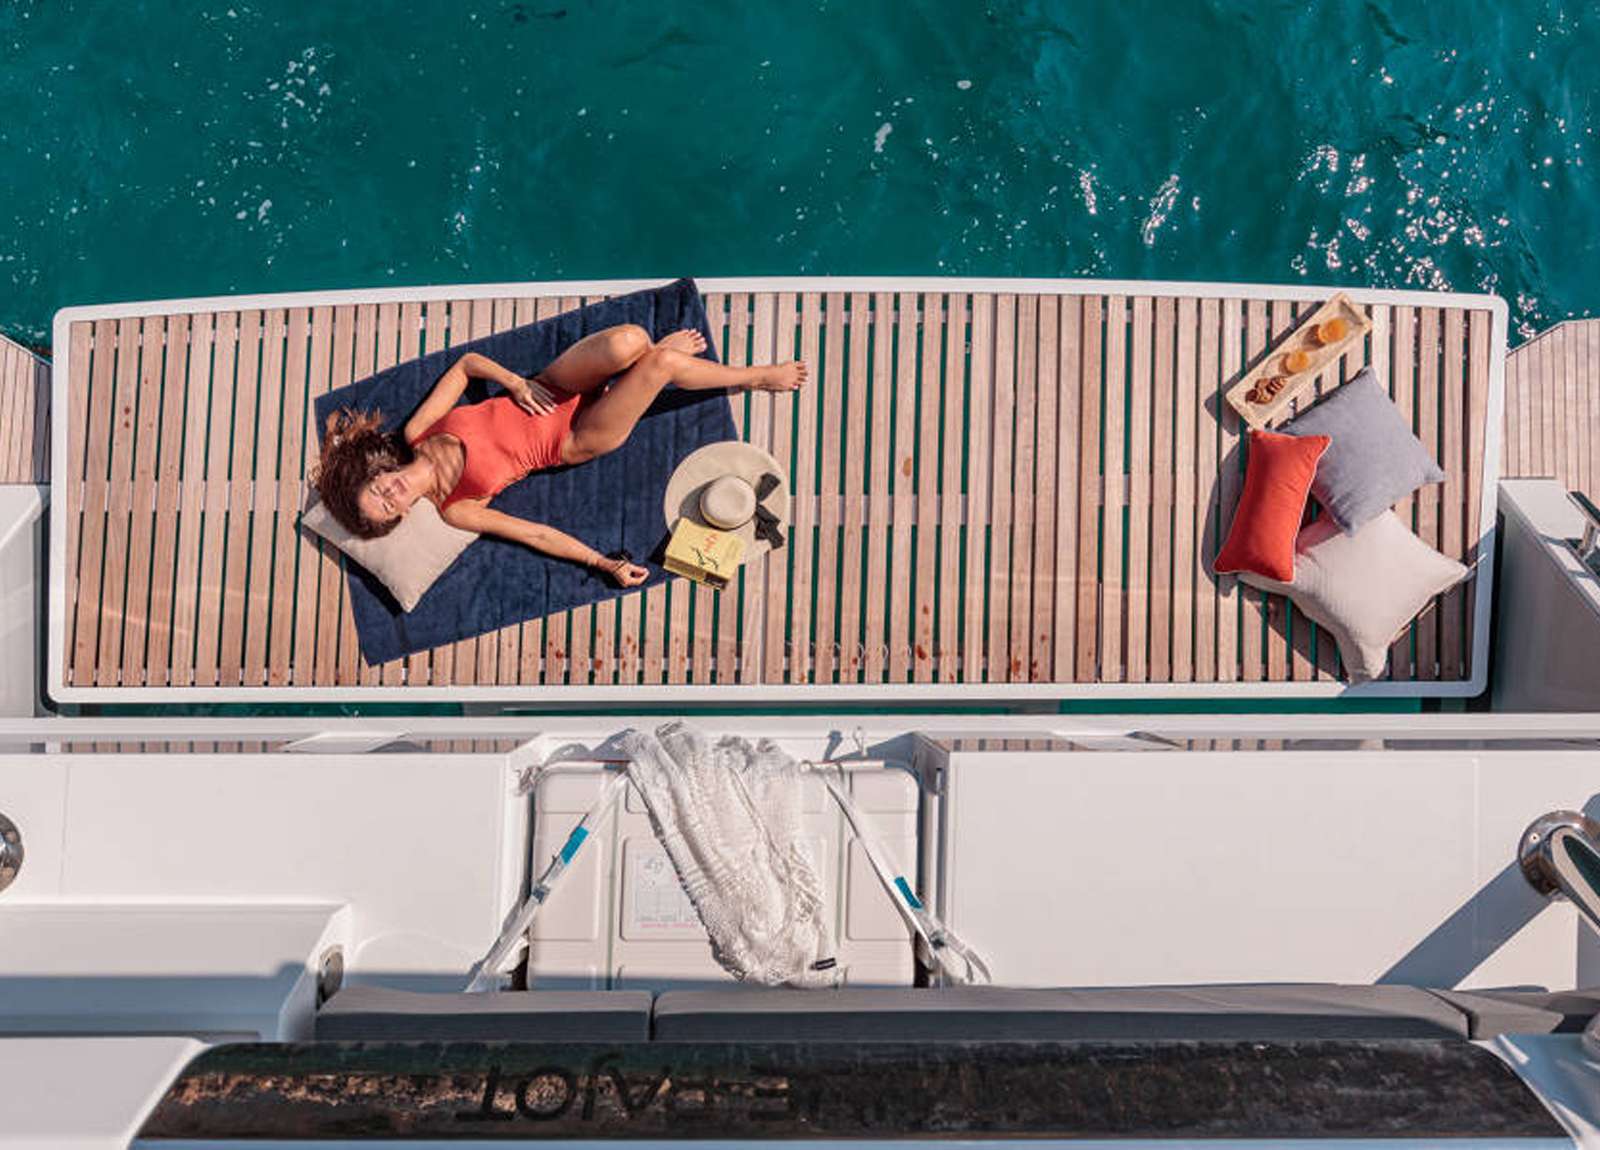 after deck luxury catamaran fountaine pajot samana 59 alma